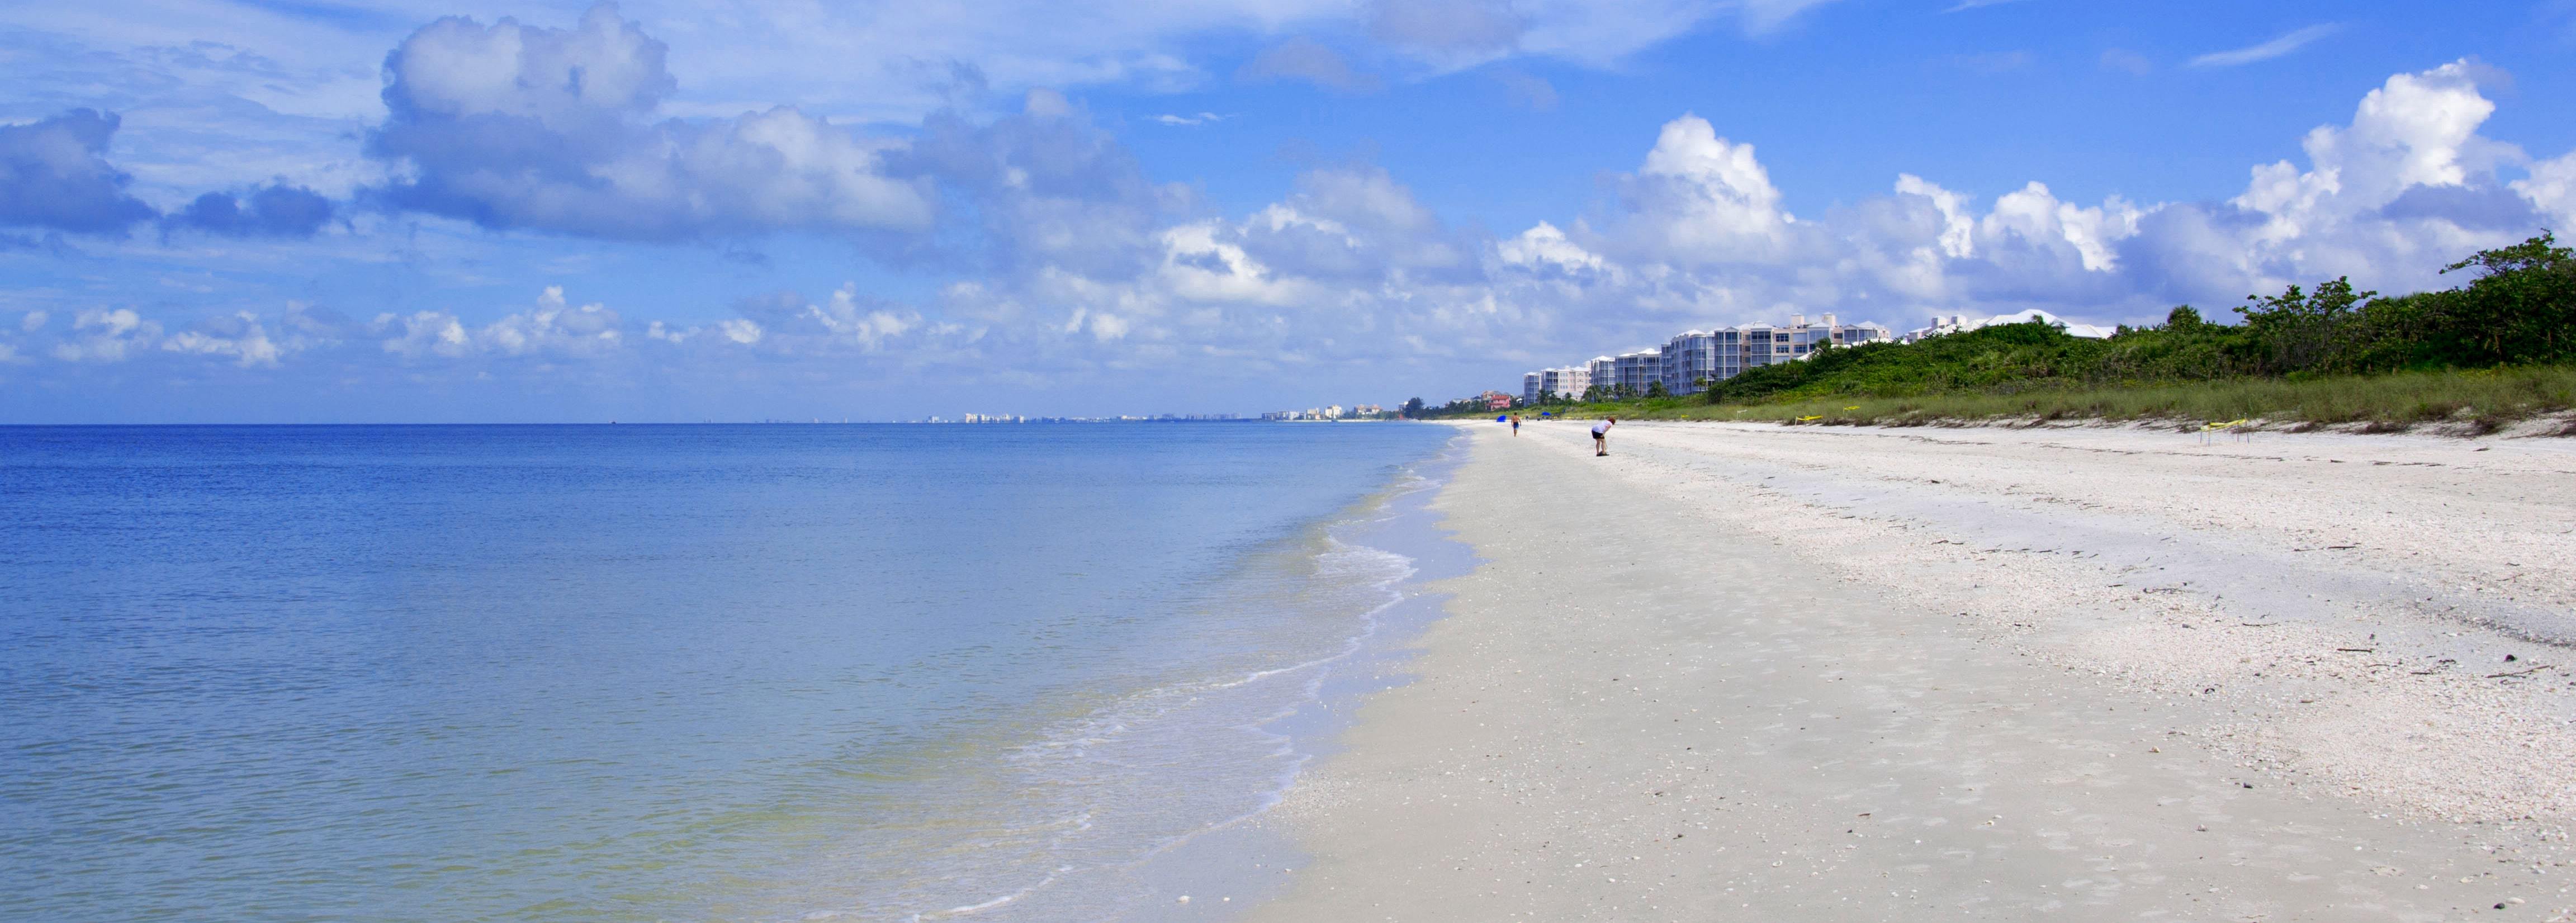 Shoreline at Barefoot Beach, FL USA